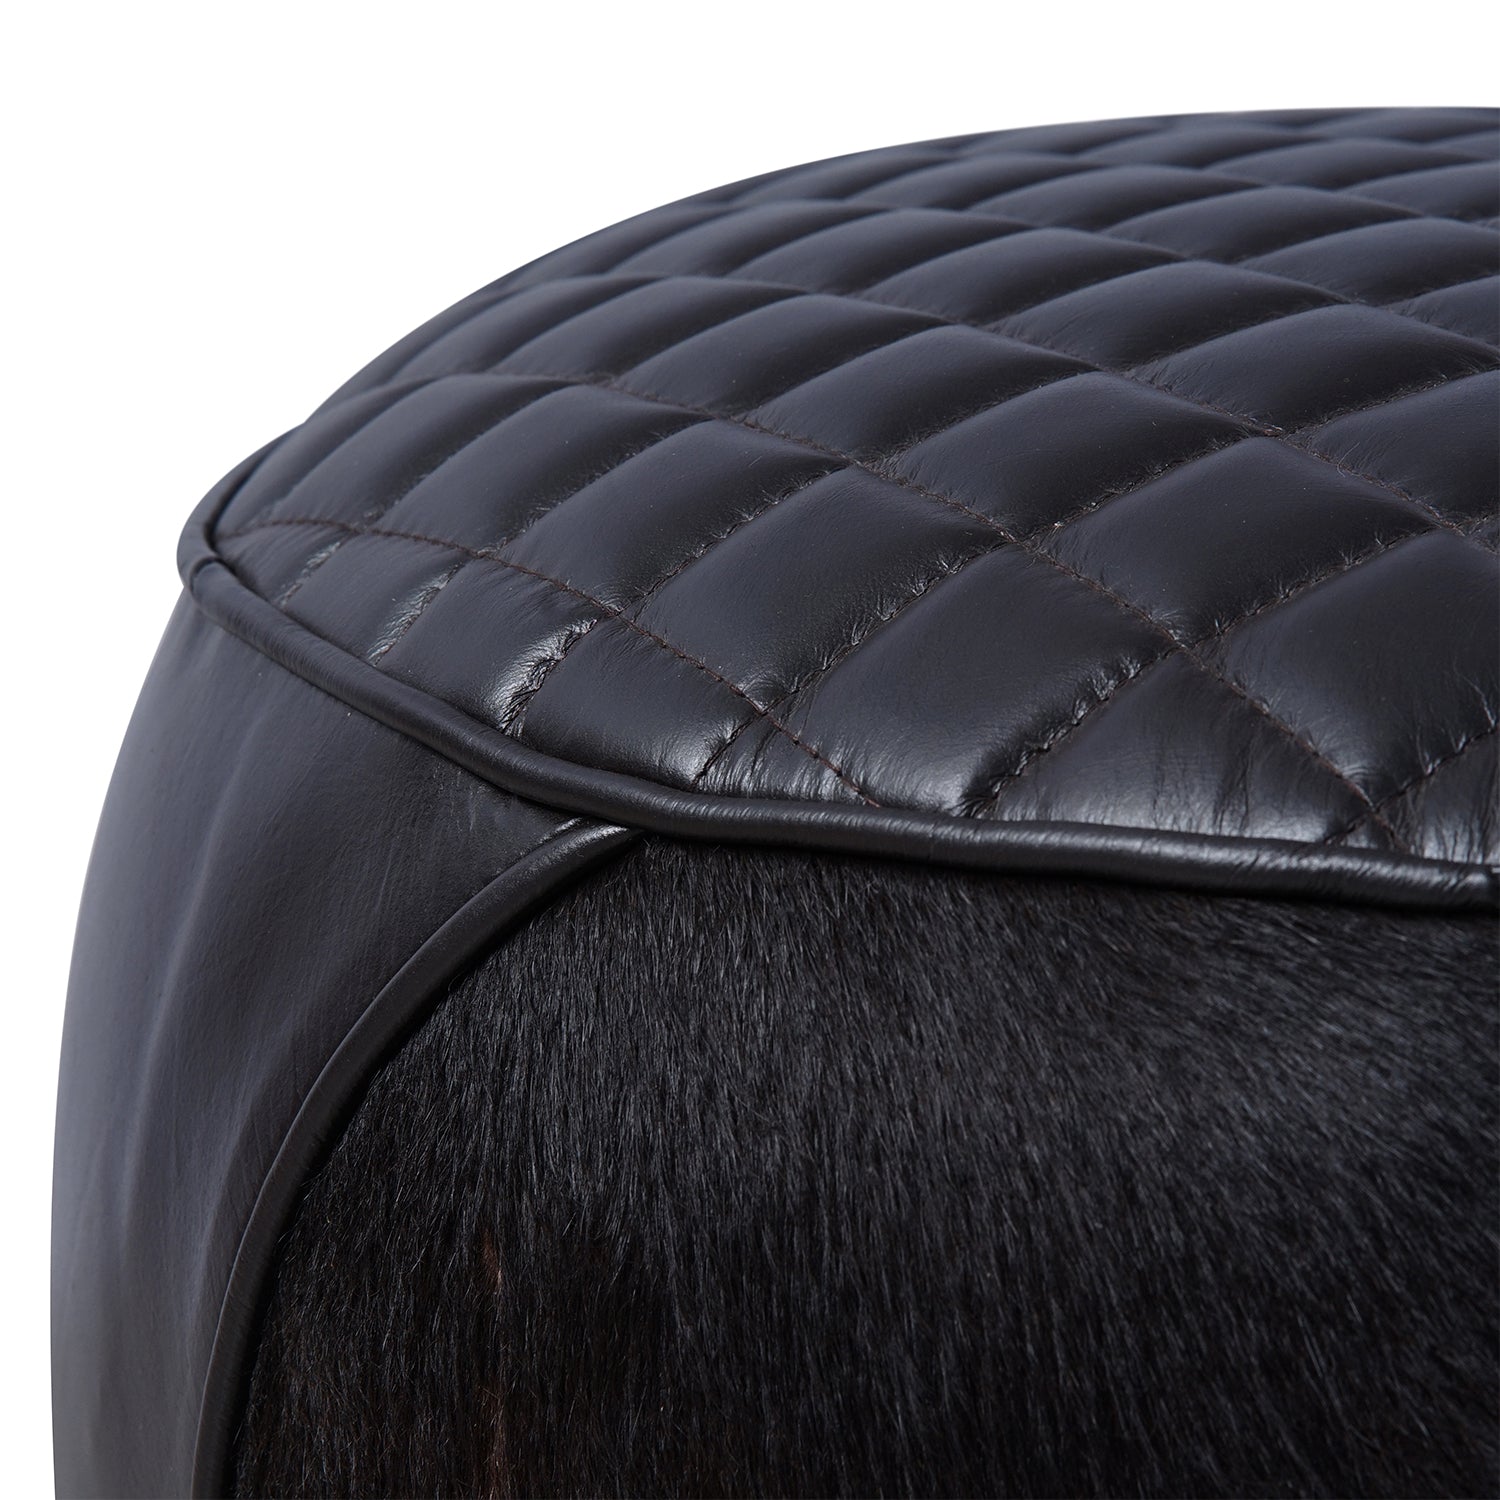 Brock Leather Ottoman Black Close Up Diamond Stitching Hair-On